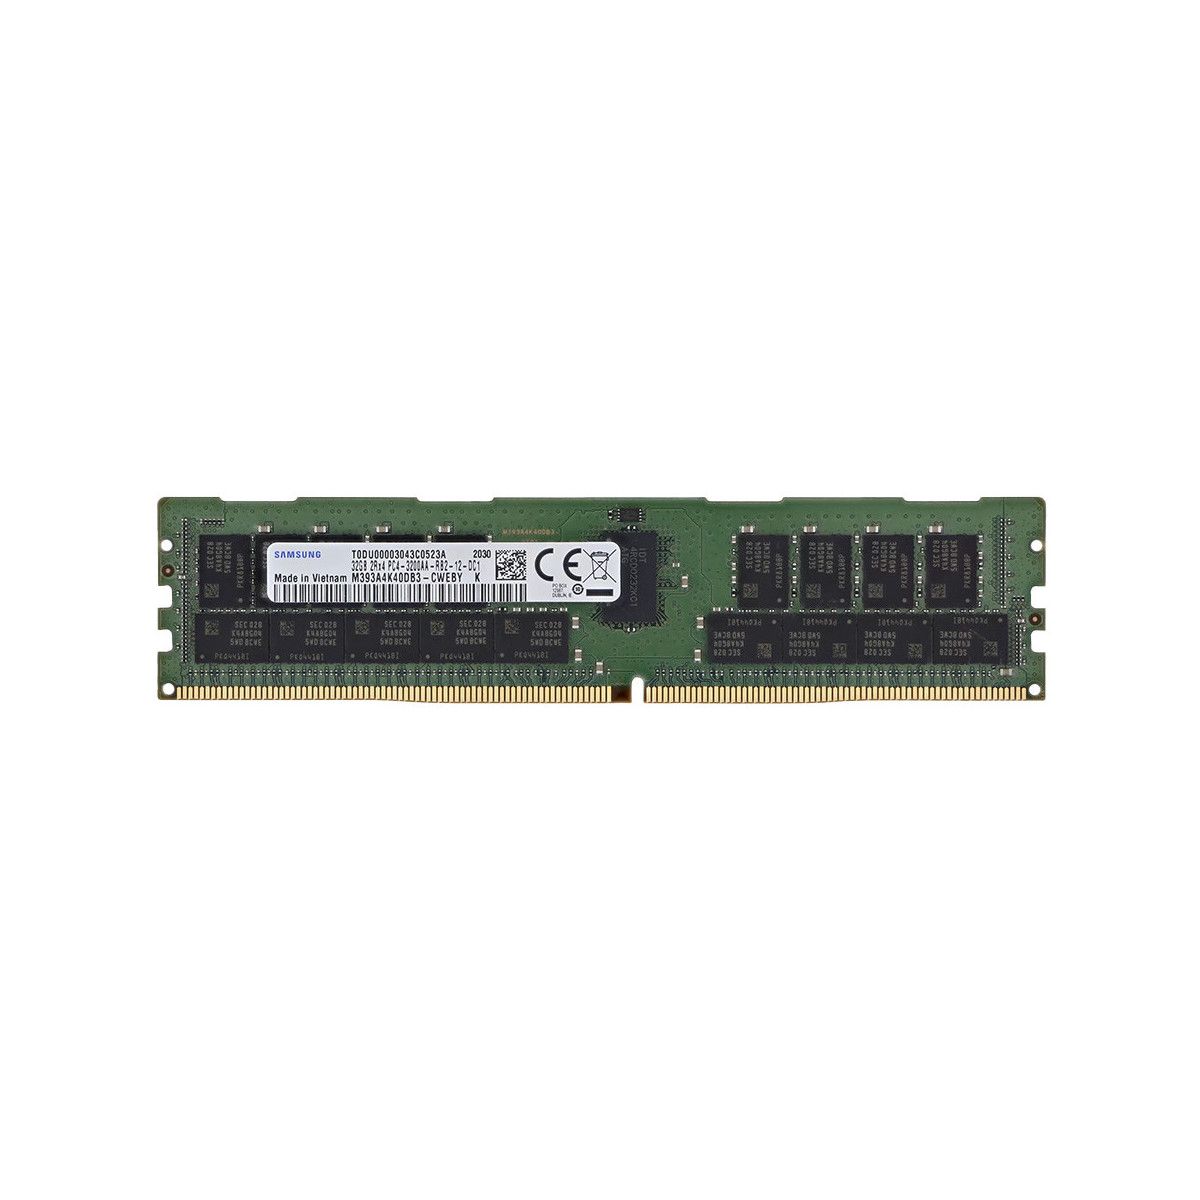 SNP75X1VC/32G-MS - Memstar 1x 32GB DDR4-3200 RDIMM PC4-25600R - Mem-Star OEM compatibile Memoria 1 - Memstar 